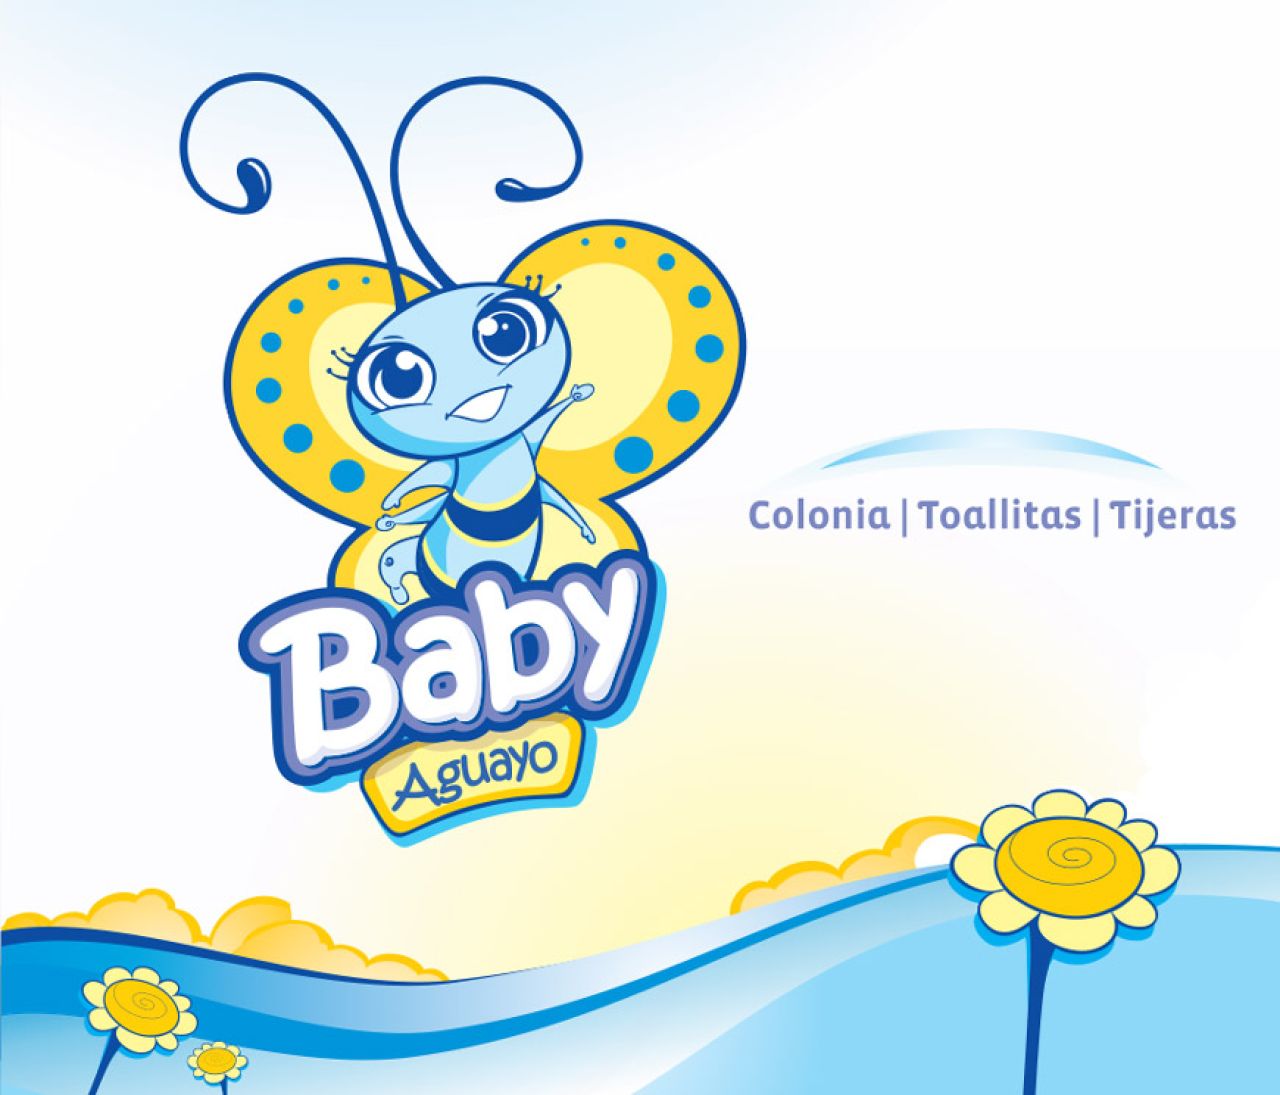 Baby Aguayo logo